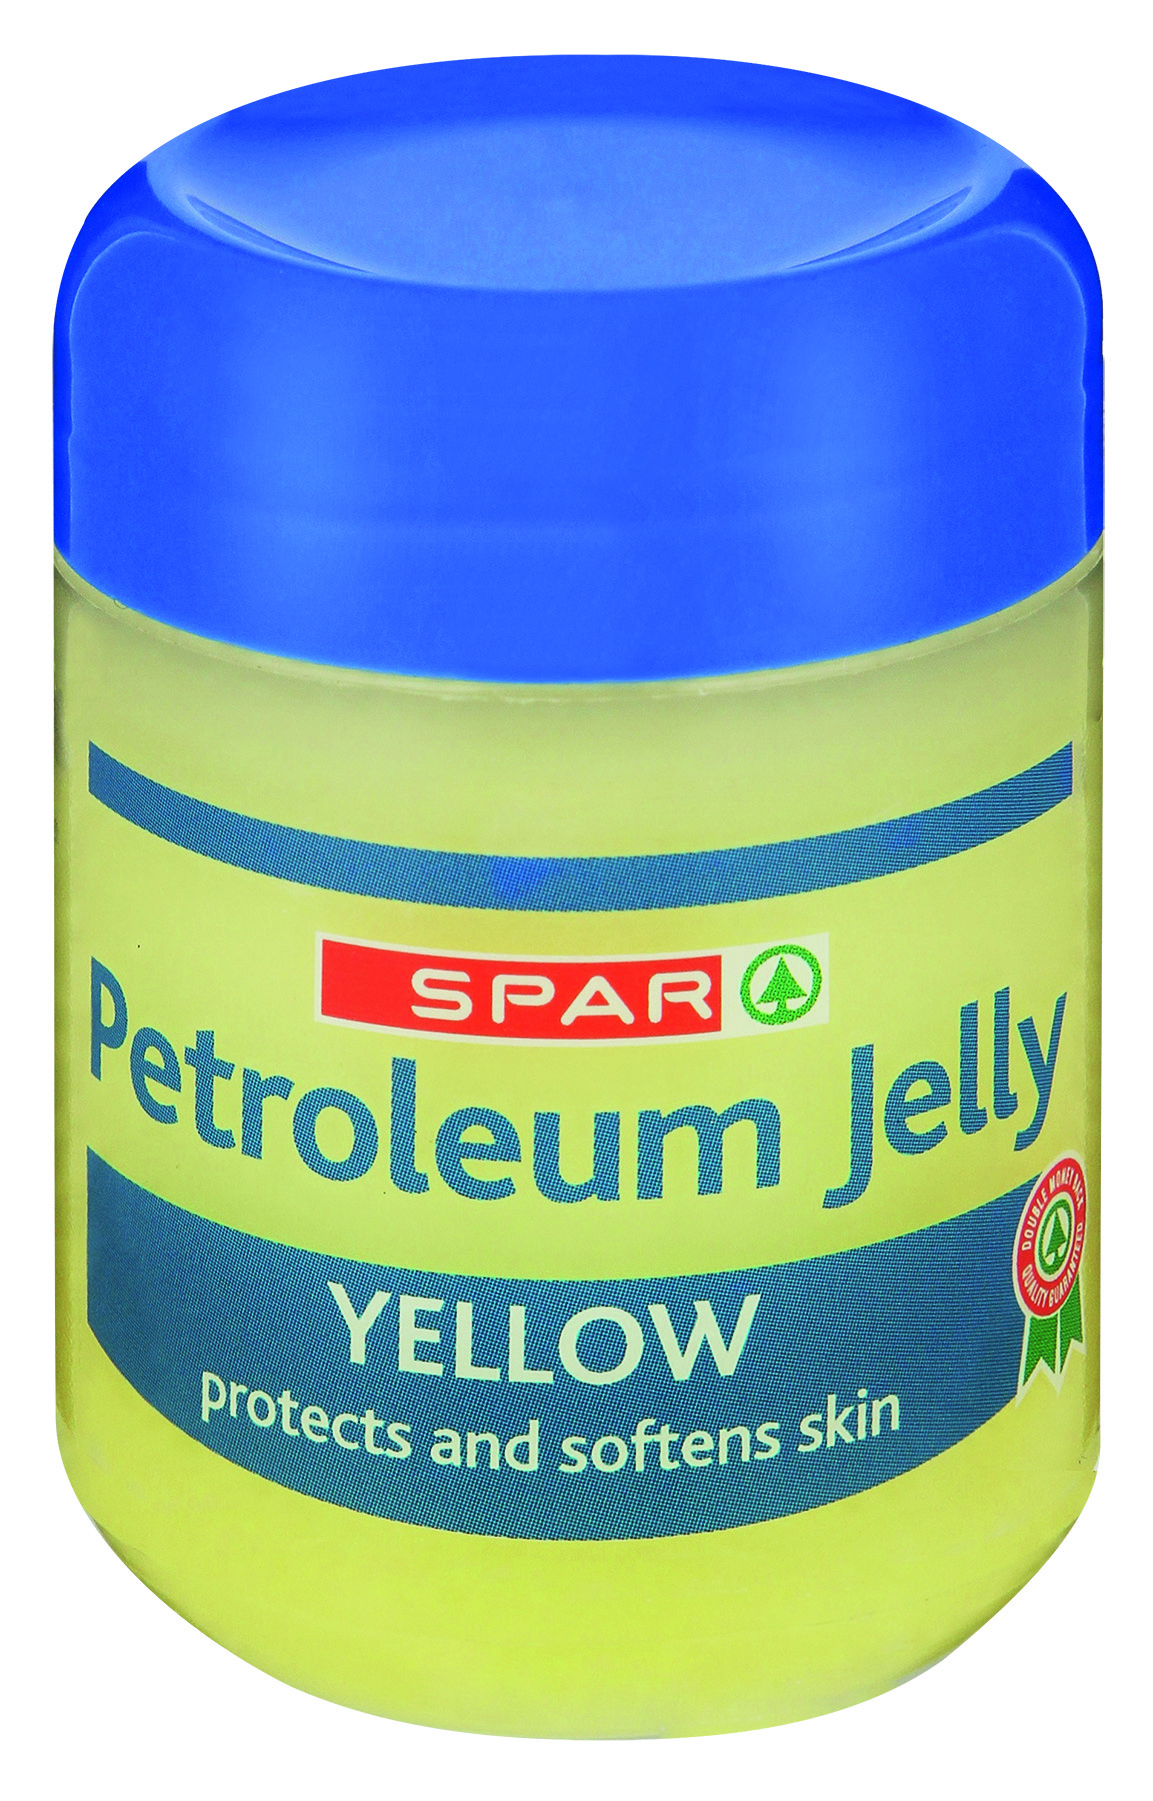 petroleum jelly yellow    